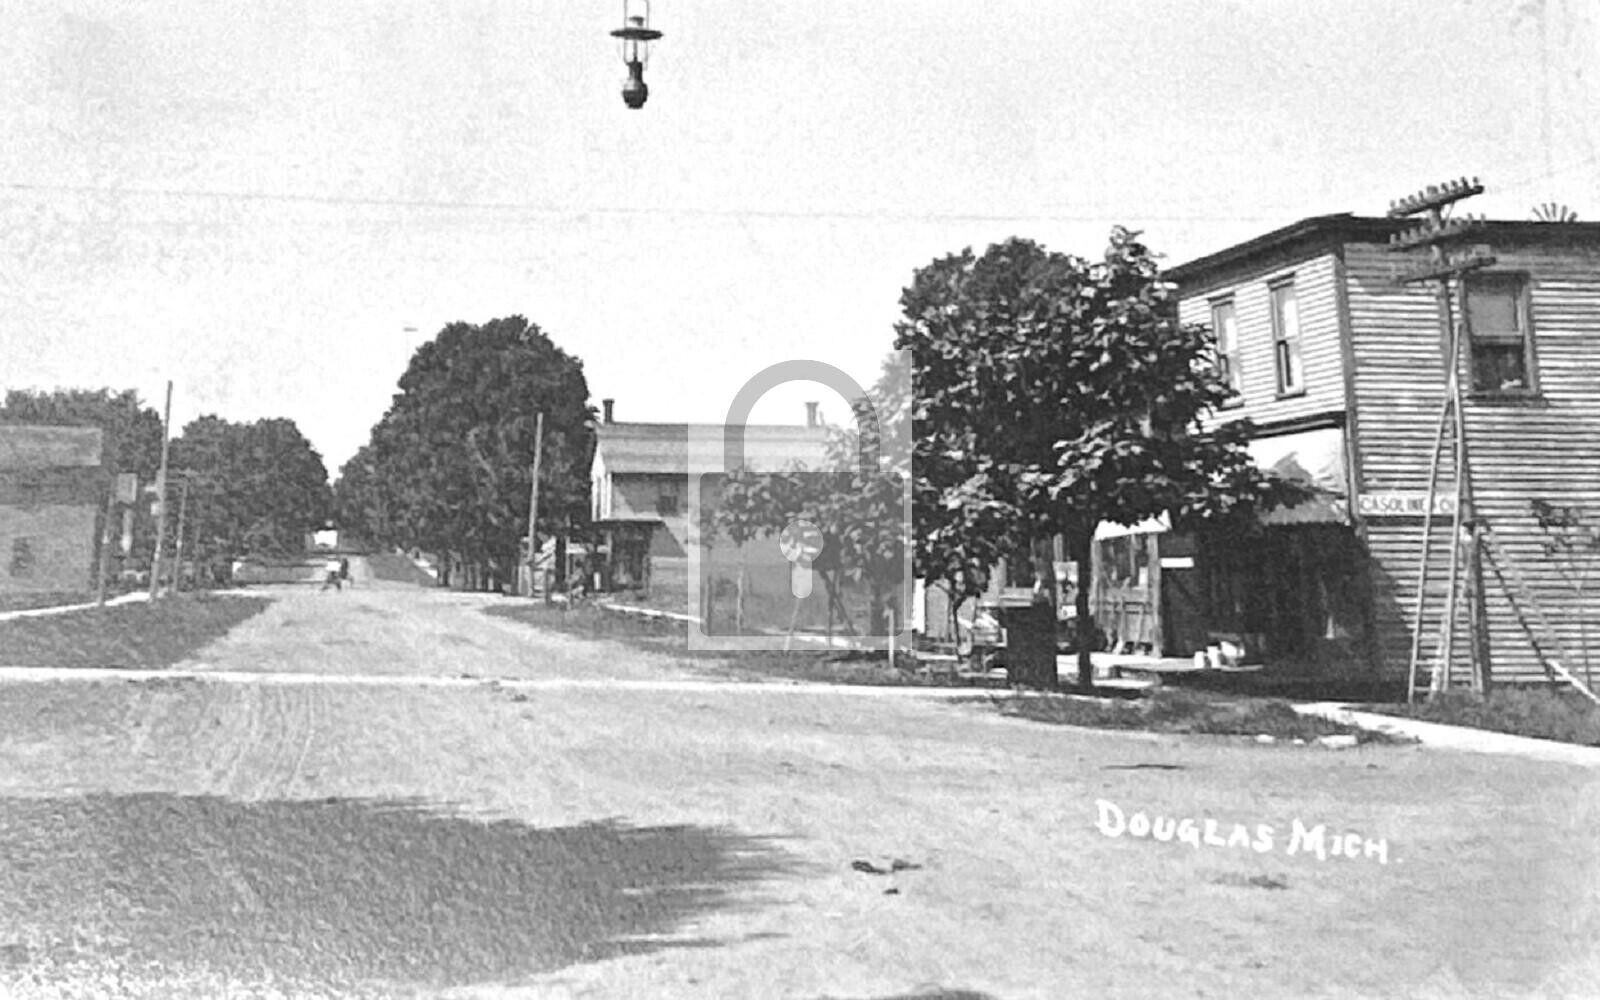 Douglas Michigan MI Street View Reprint Postcard